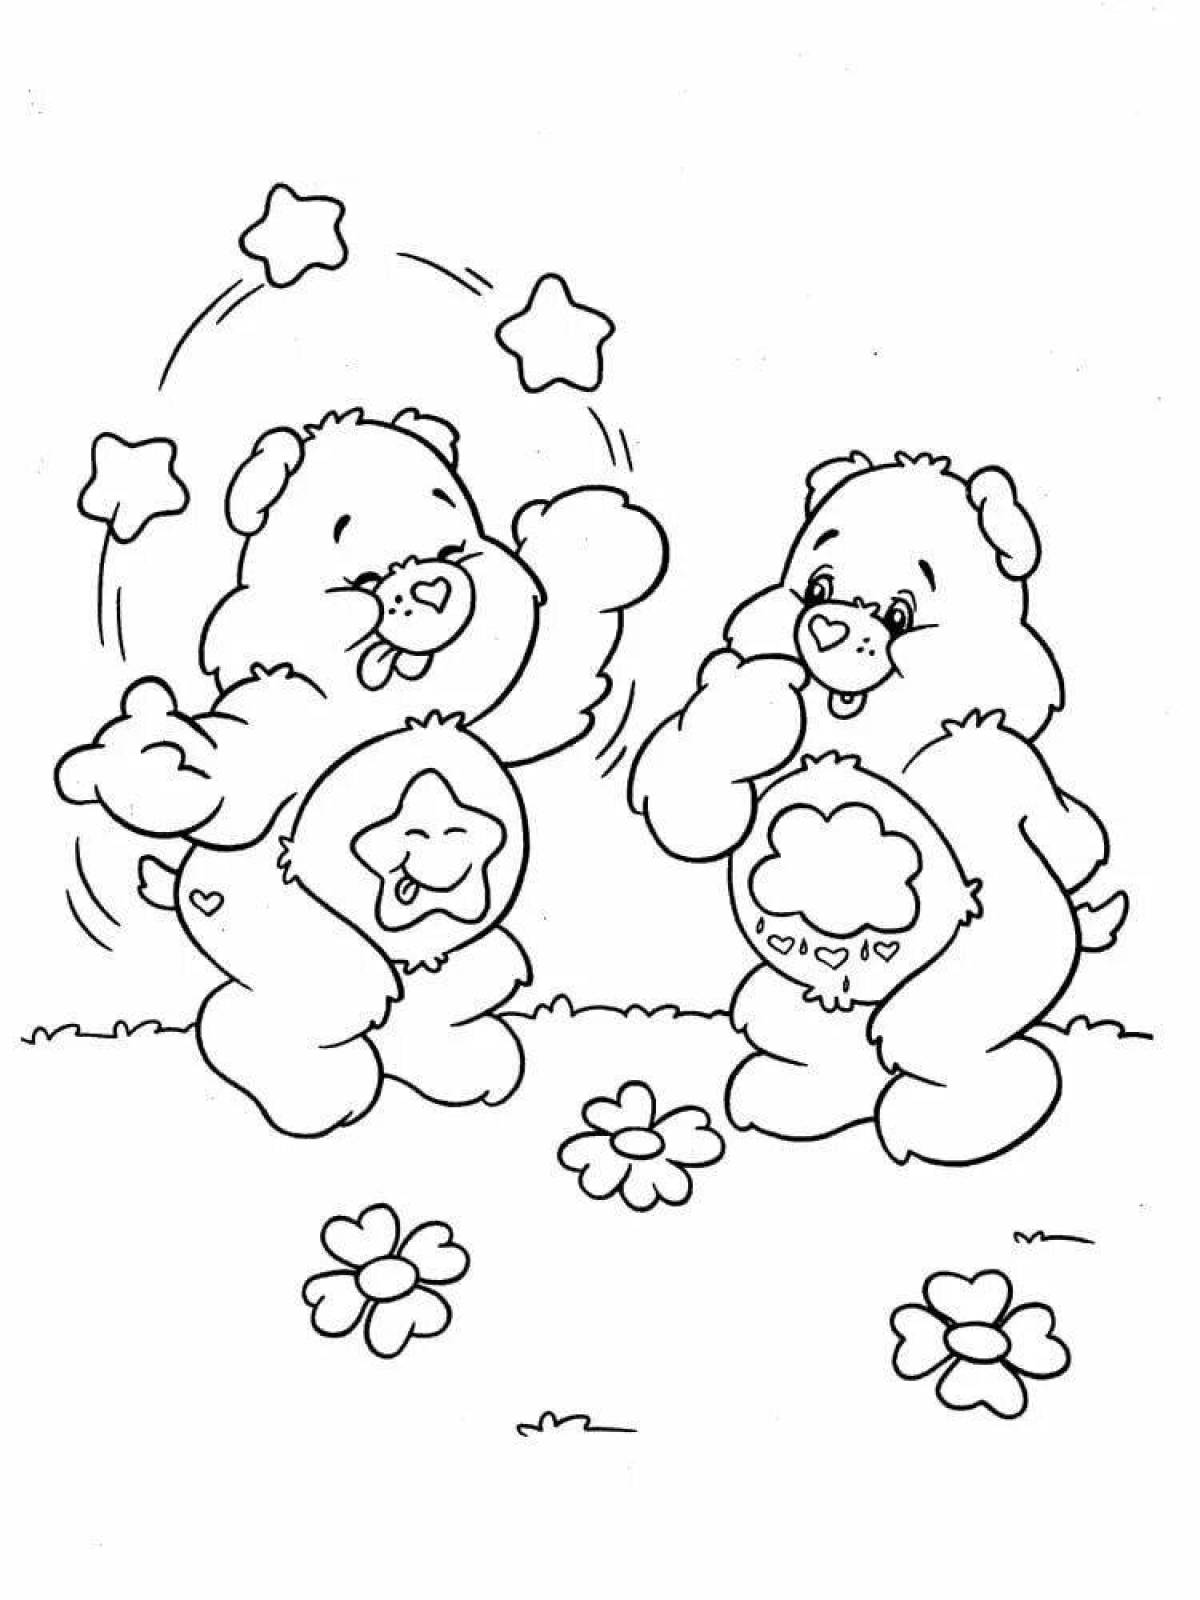 Two greedy bear cubs #10